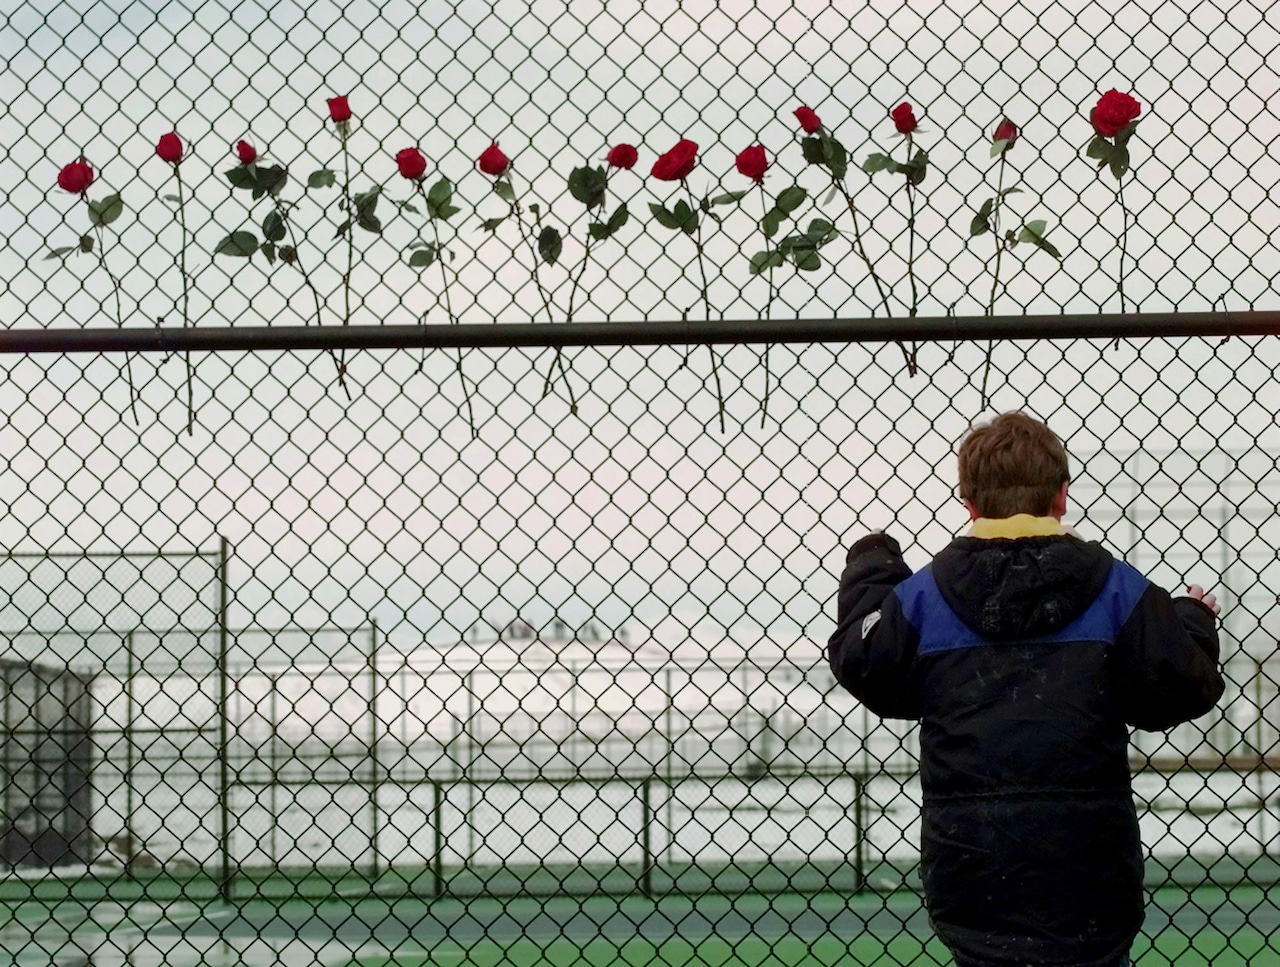 25 years after Columbine school shooting, trauma follows survivors [Video]